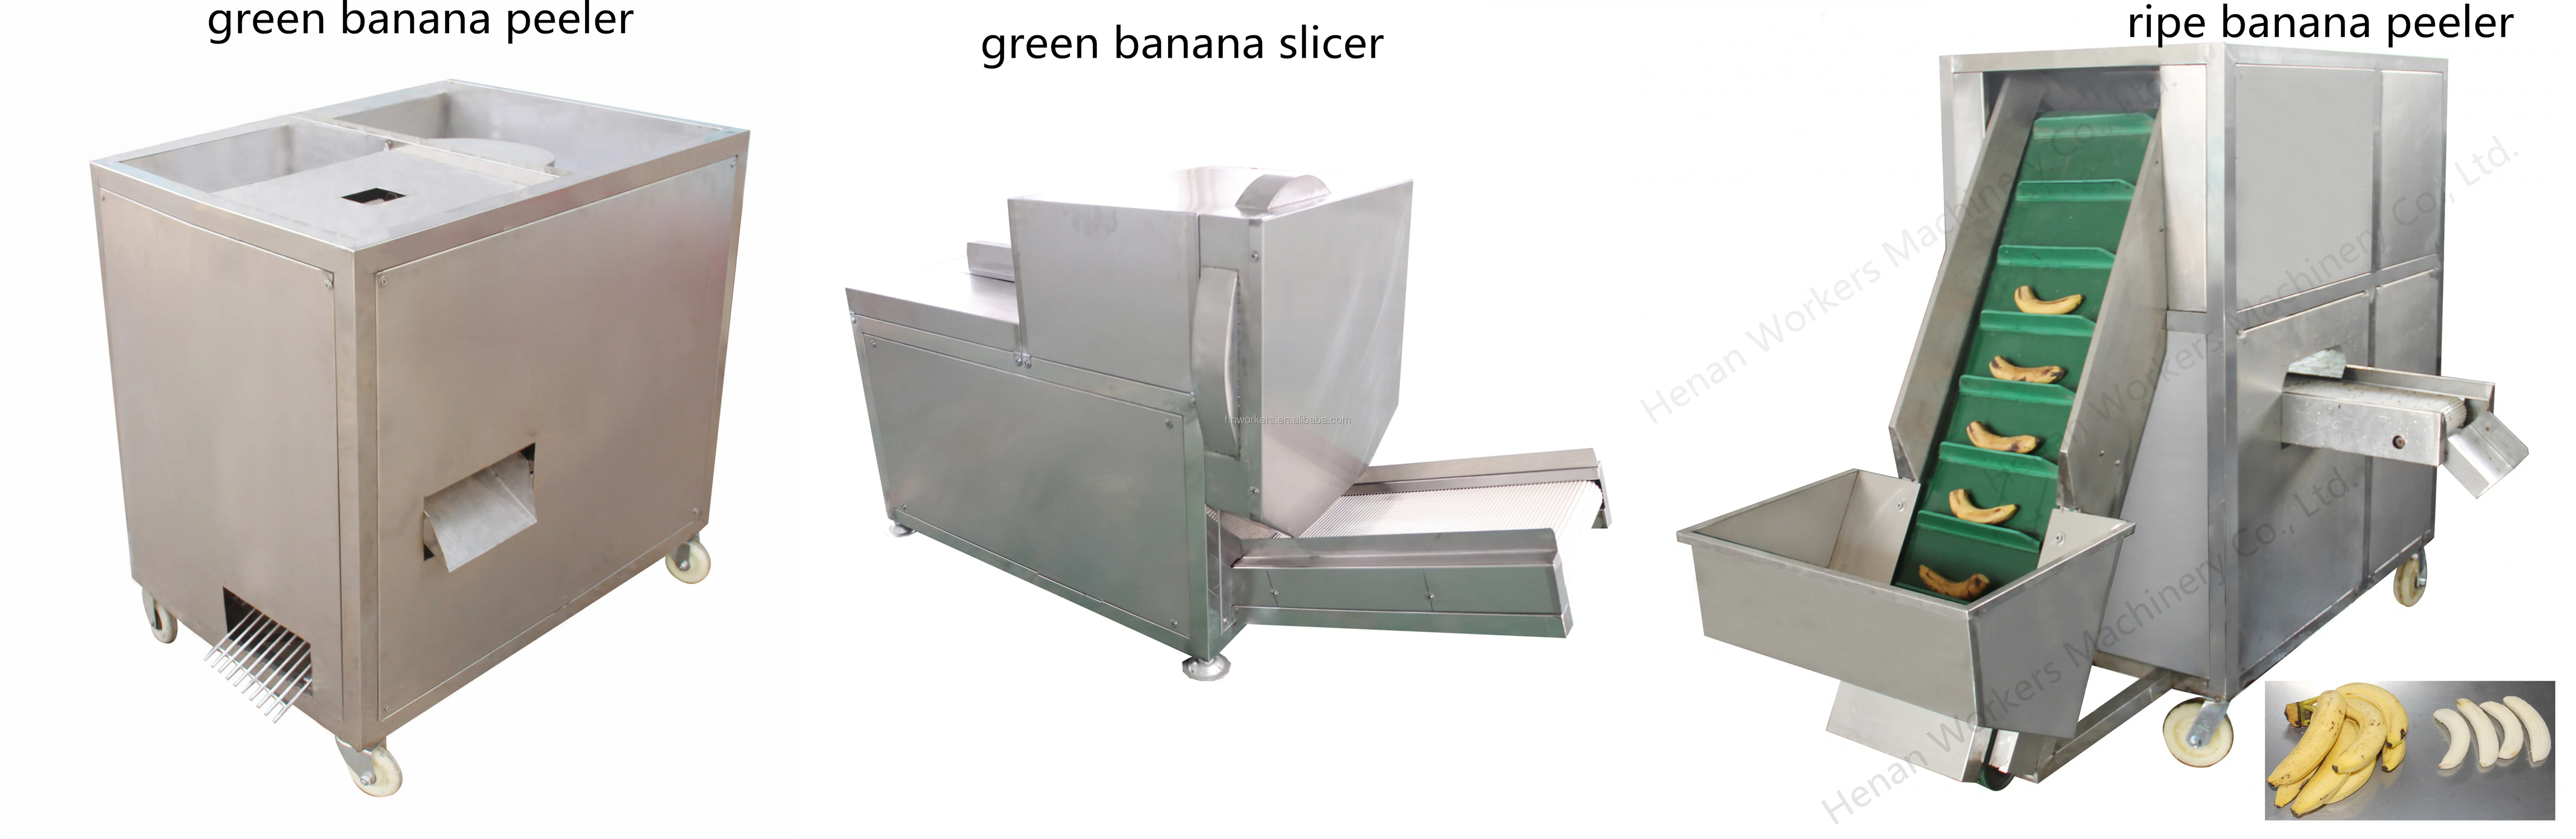 Banana peeler plantain peeling machine